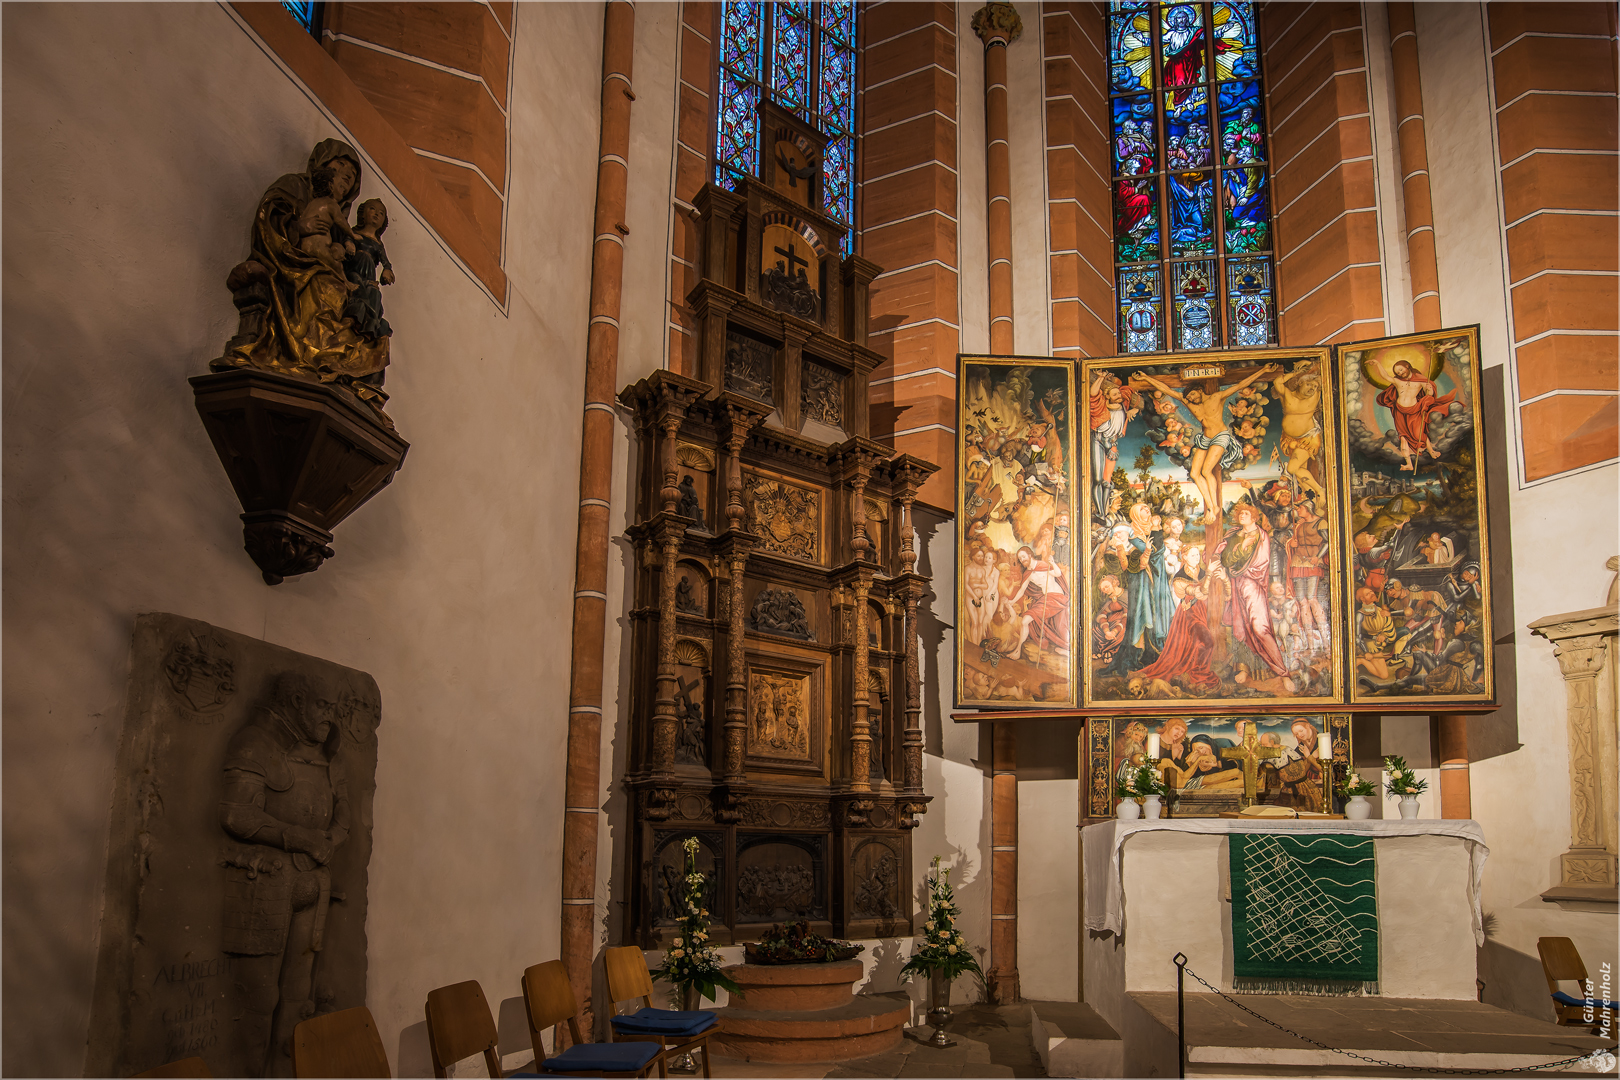 Mansfeld: Im Chor der Schlosskirche